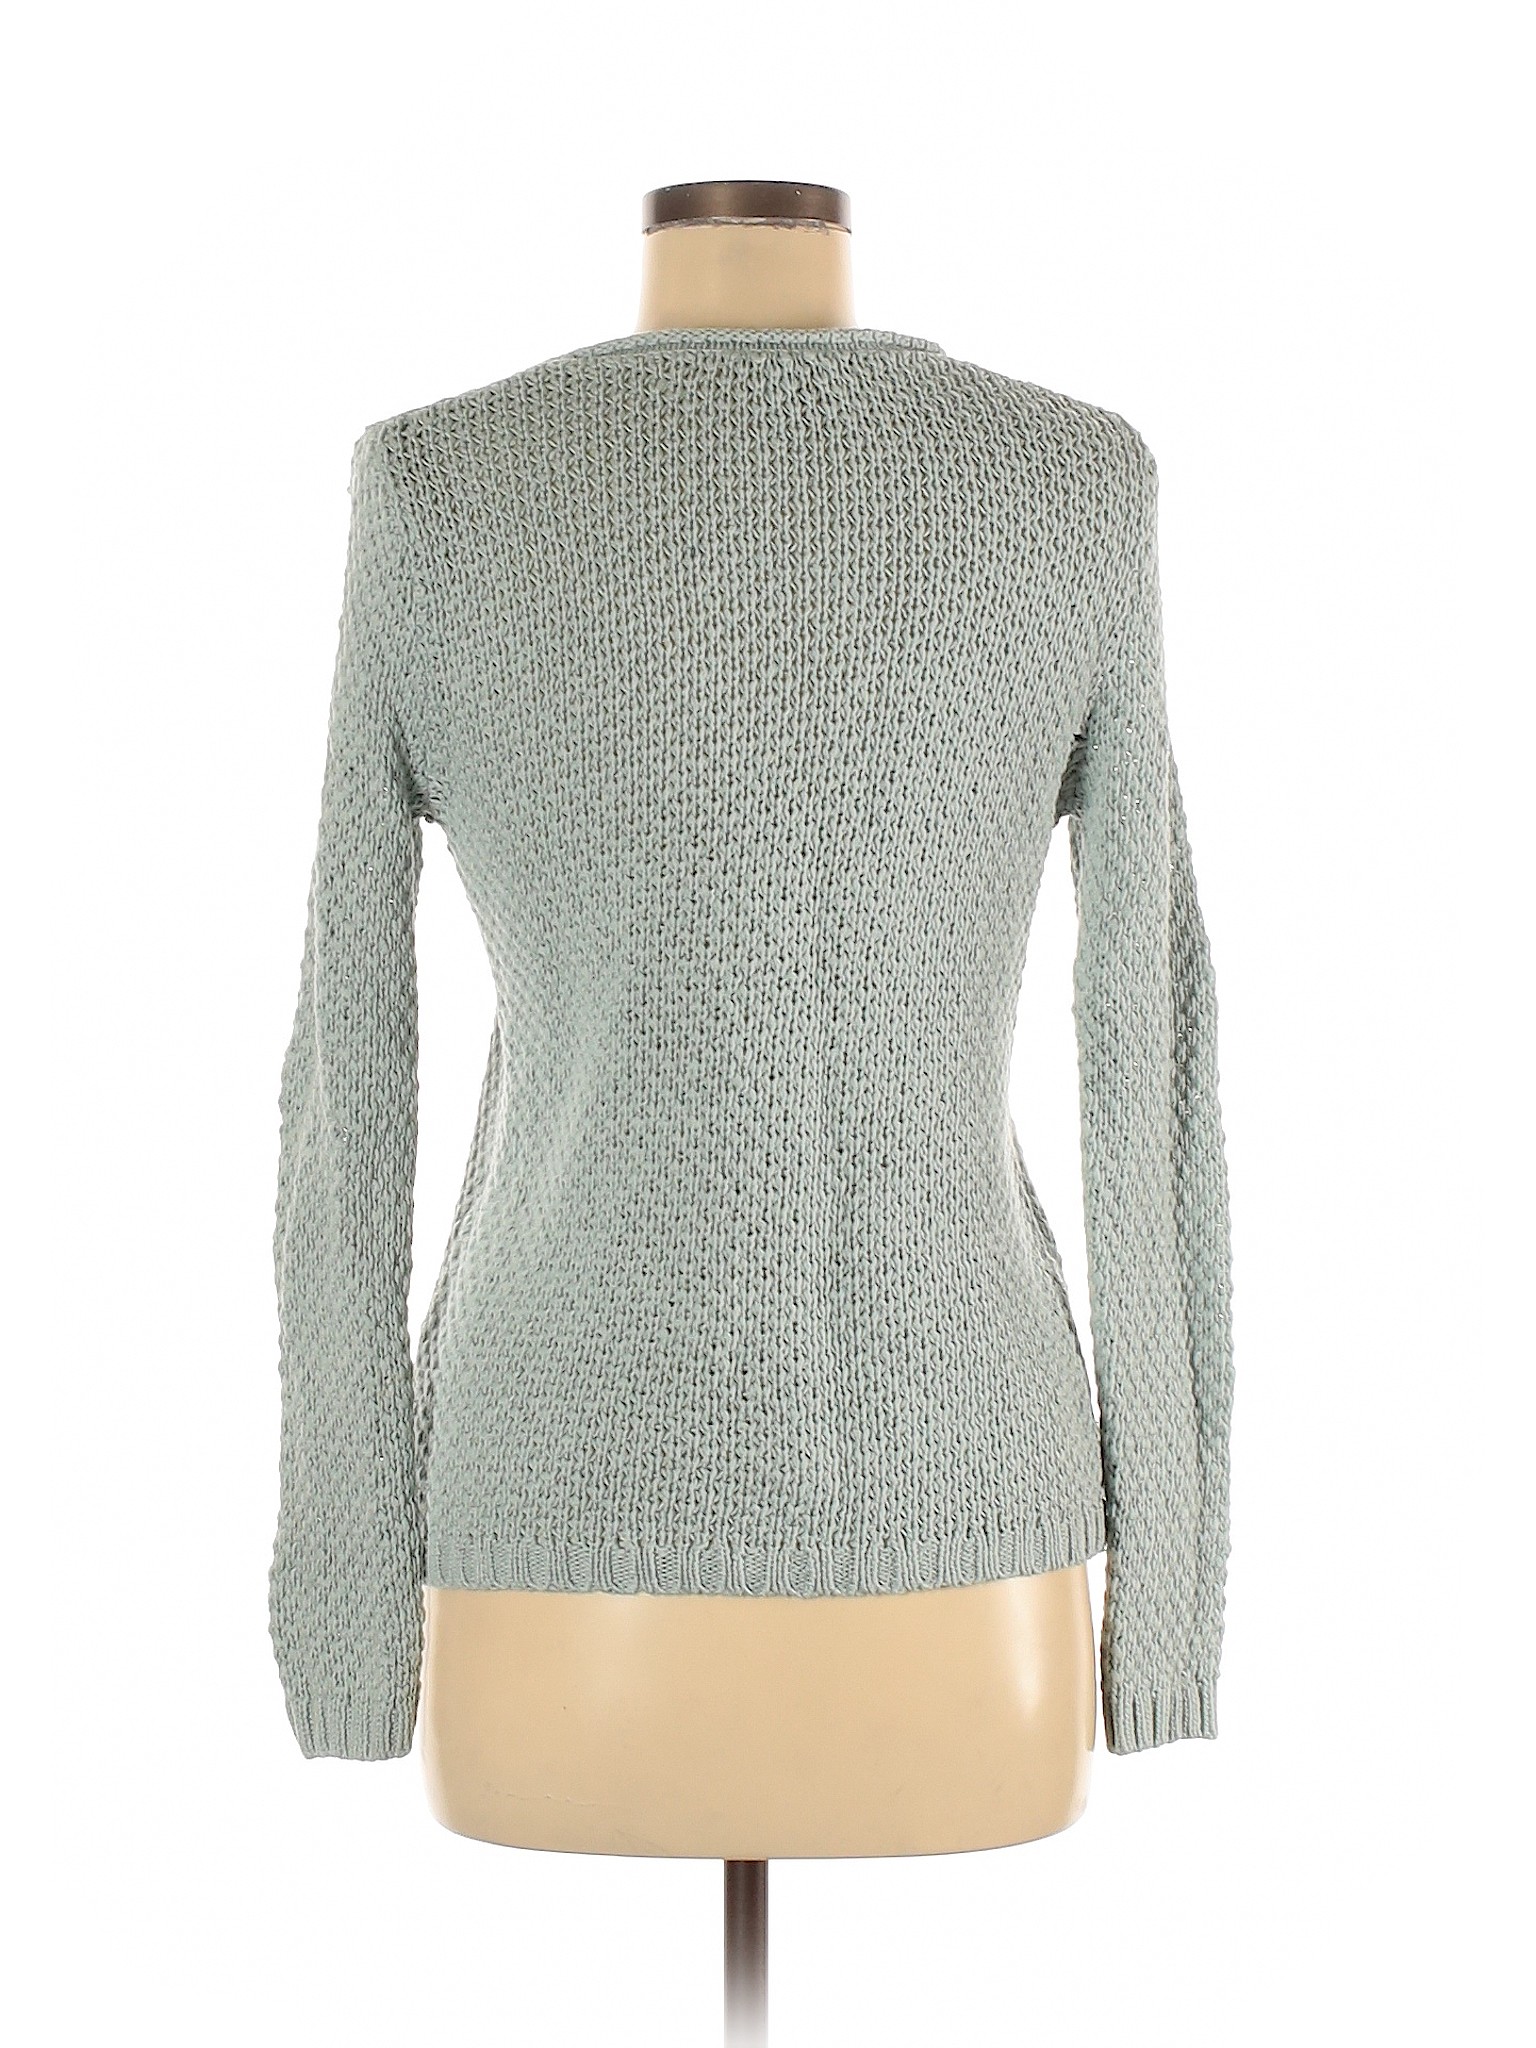 Gap Women Green Pullover Sweater M | eBay